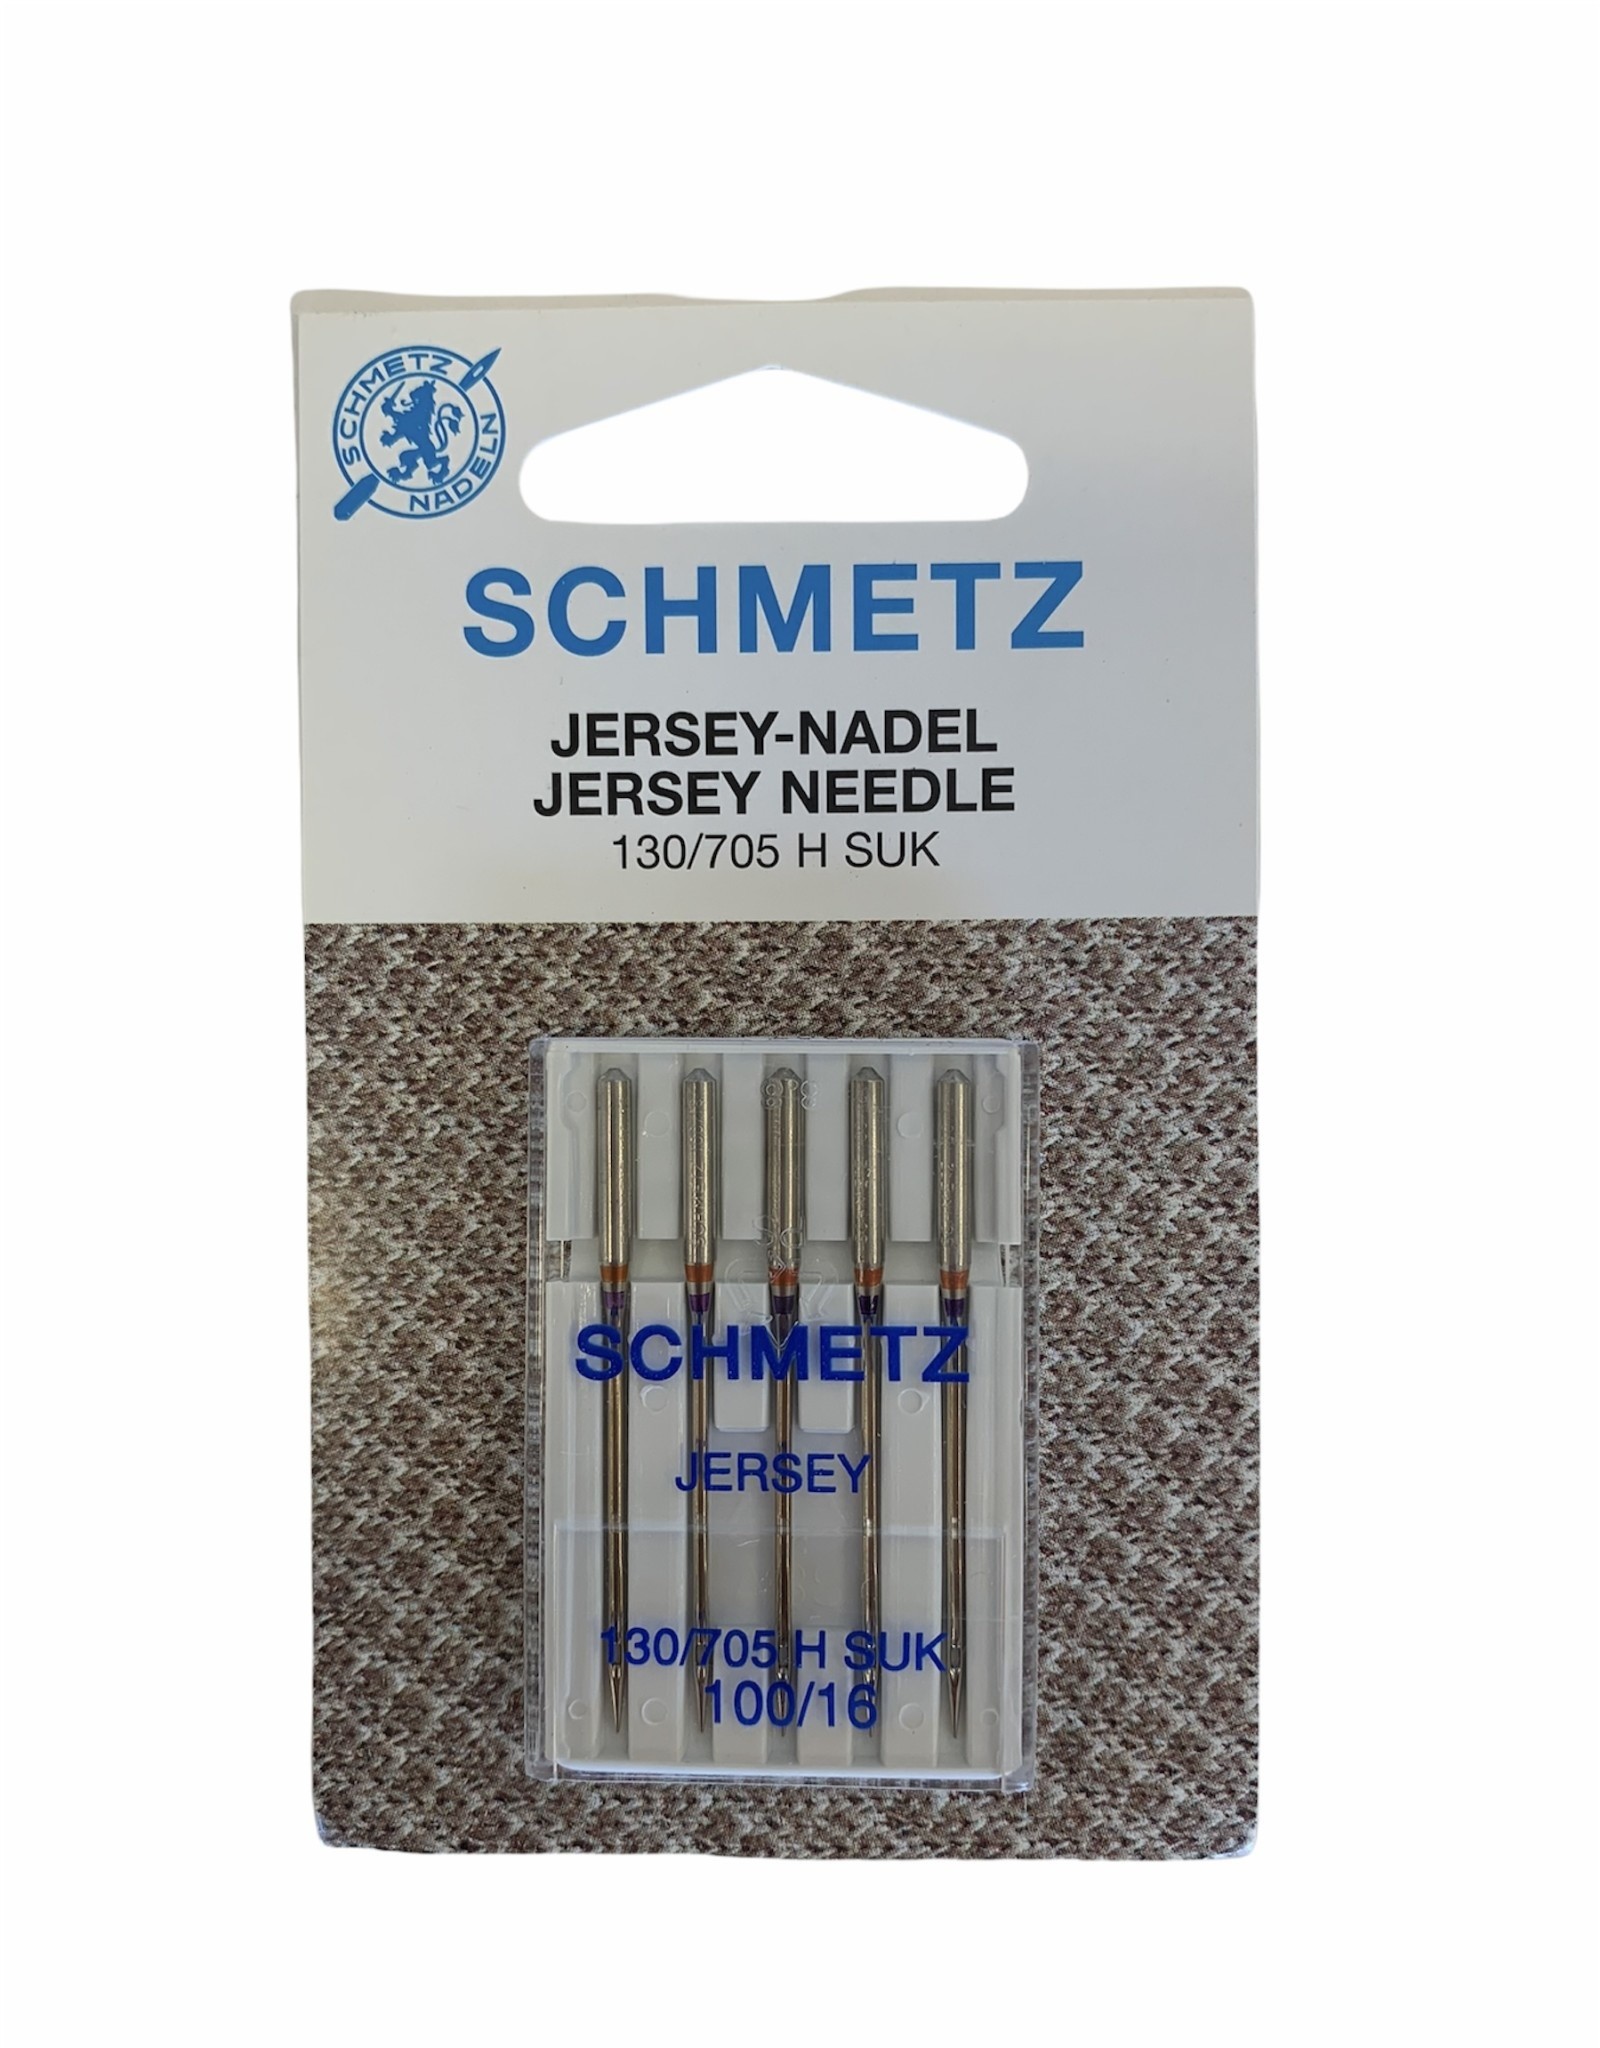 Schmetz Schmetz Jersey Needle 100/16, 130/705 H SUK